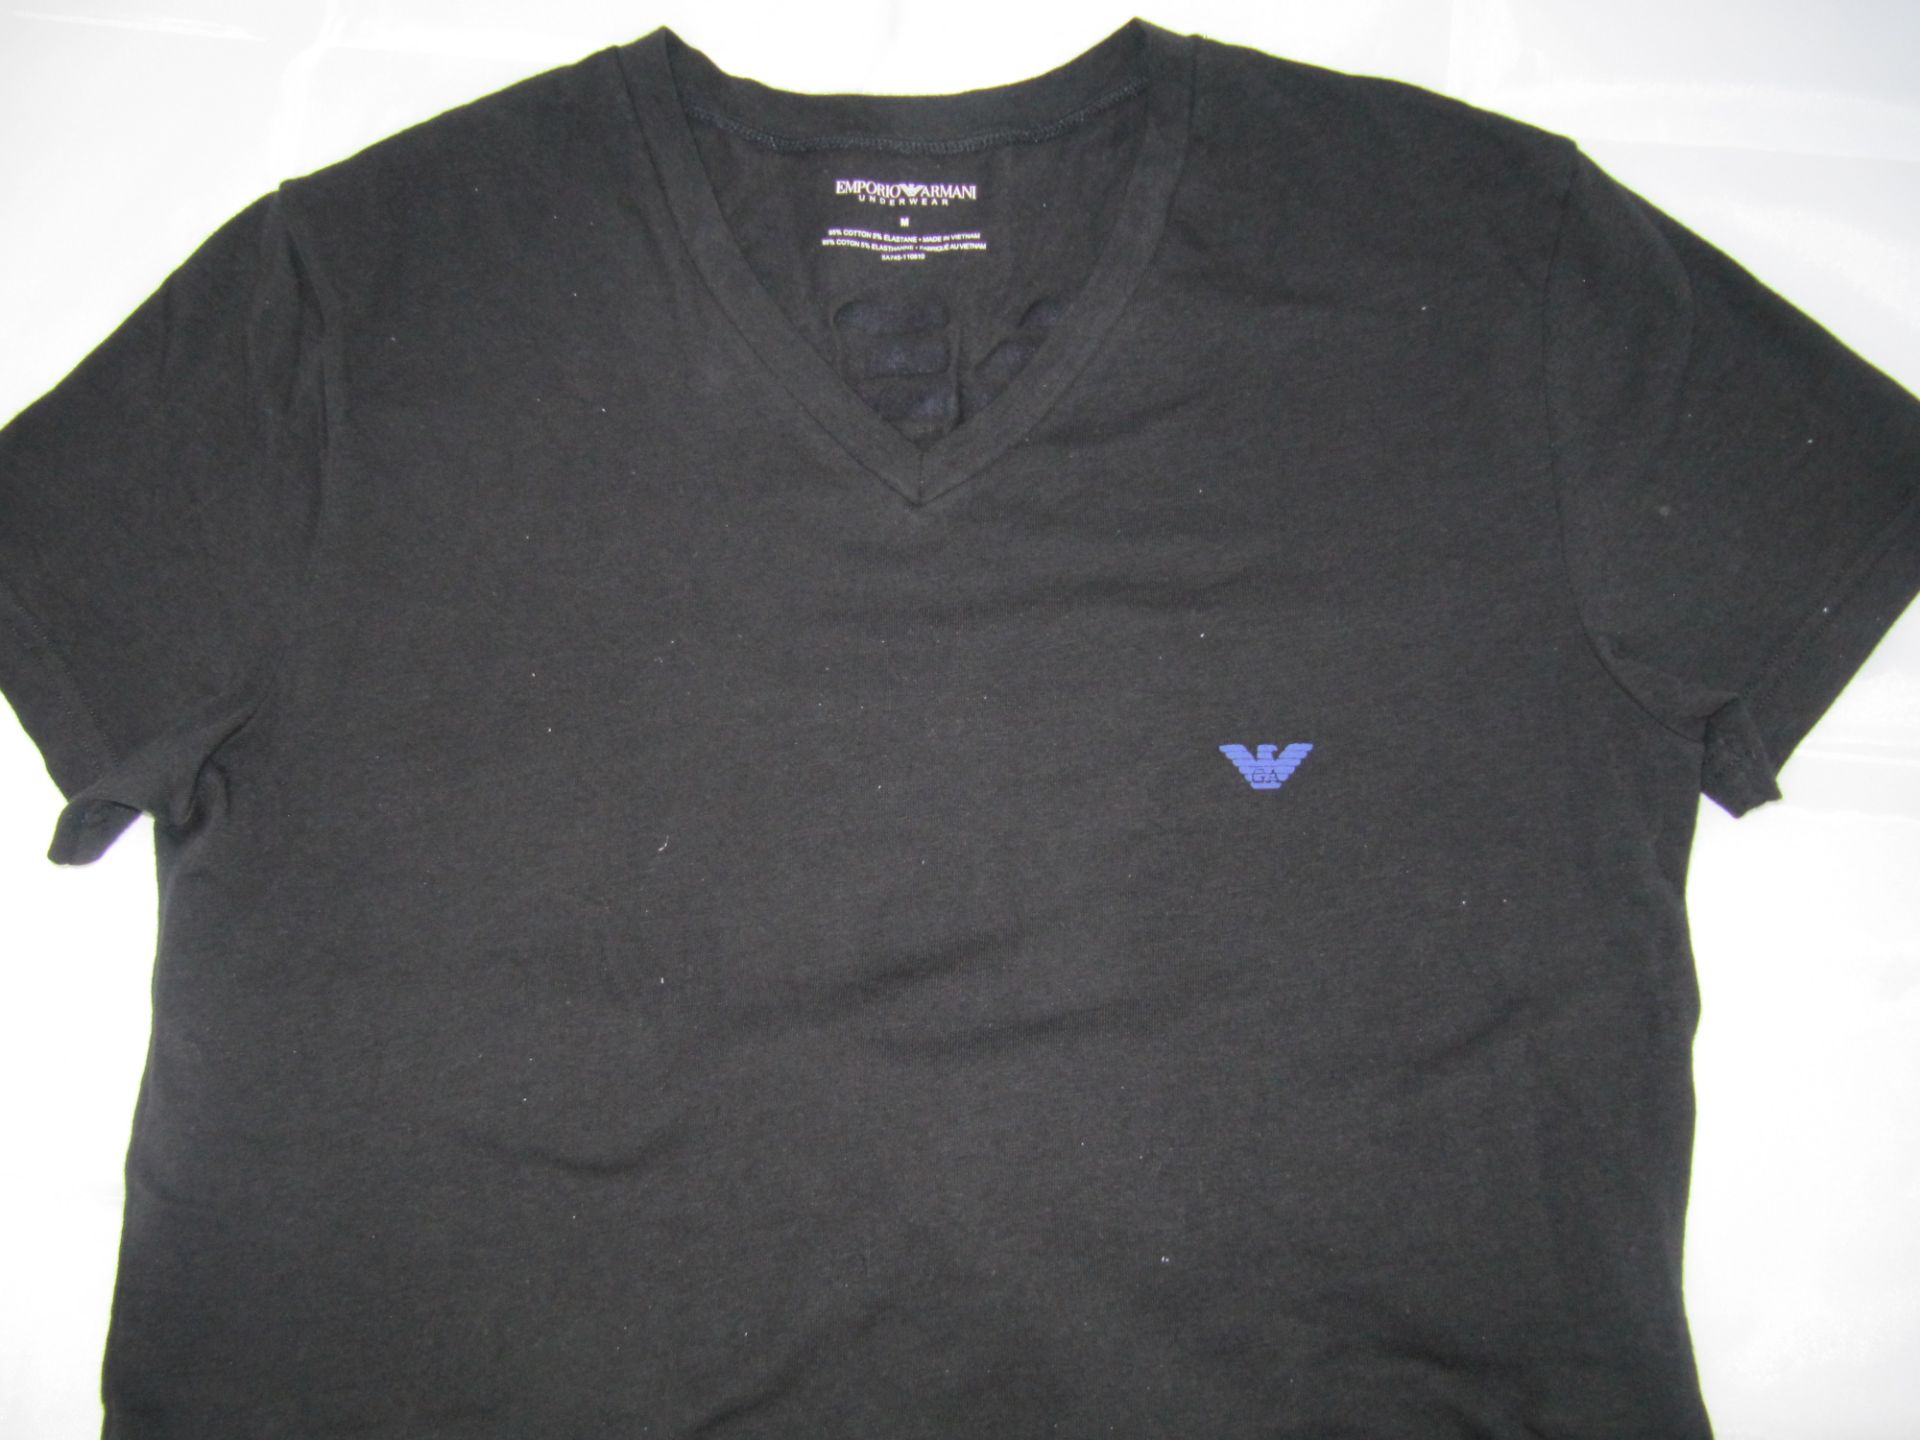 2 x Emporio Armani V neck Tee Shirt. - Image 2 of 6